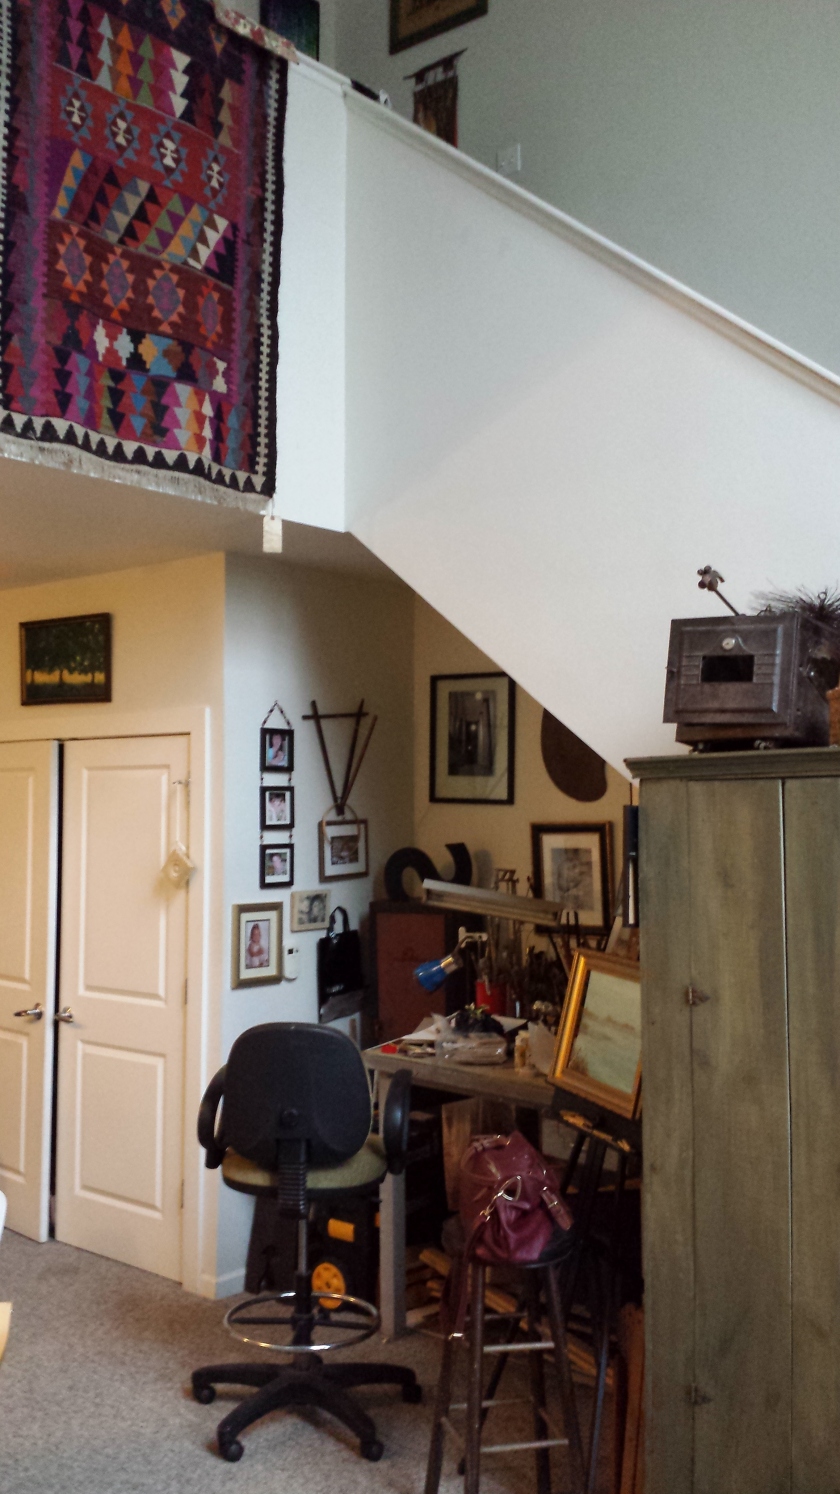 Jean Weir's creative space in her first floor loft apartment